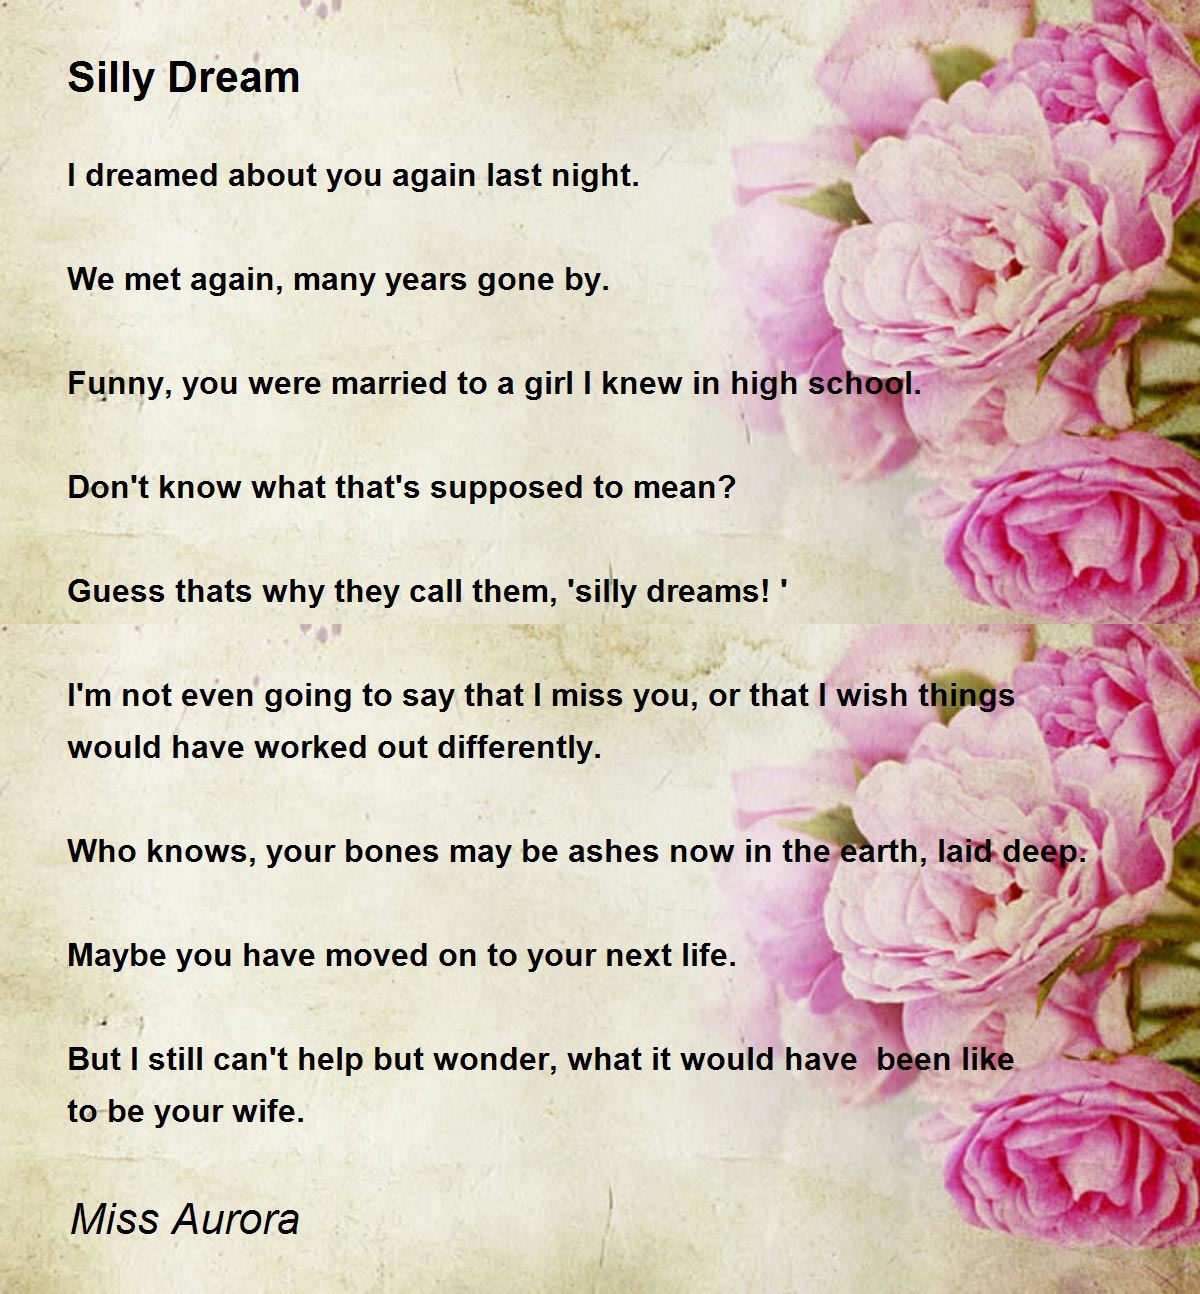 Silly Dream - Silly Dream Poem by Miss Aurora